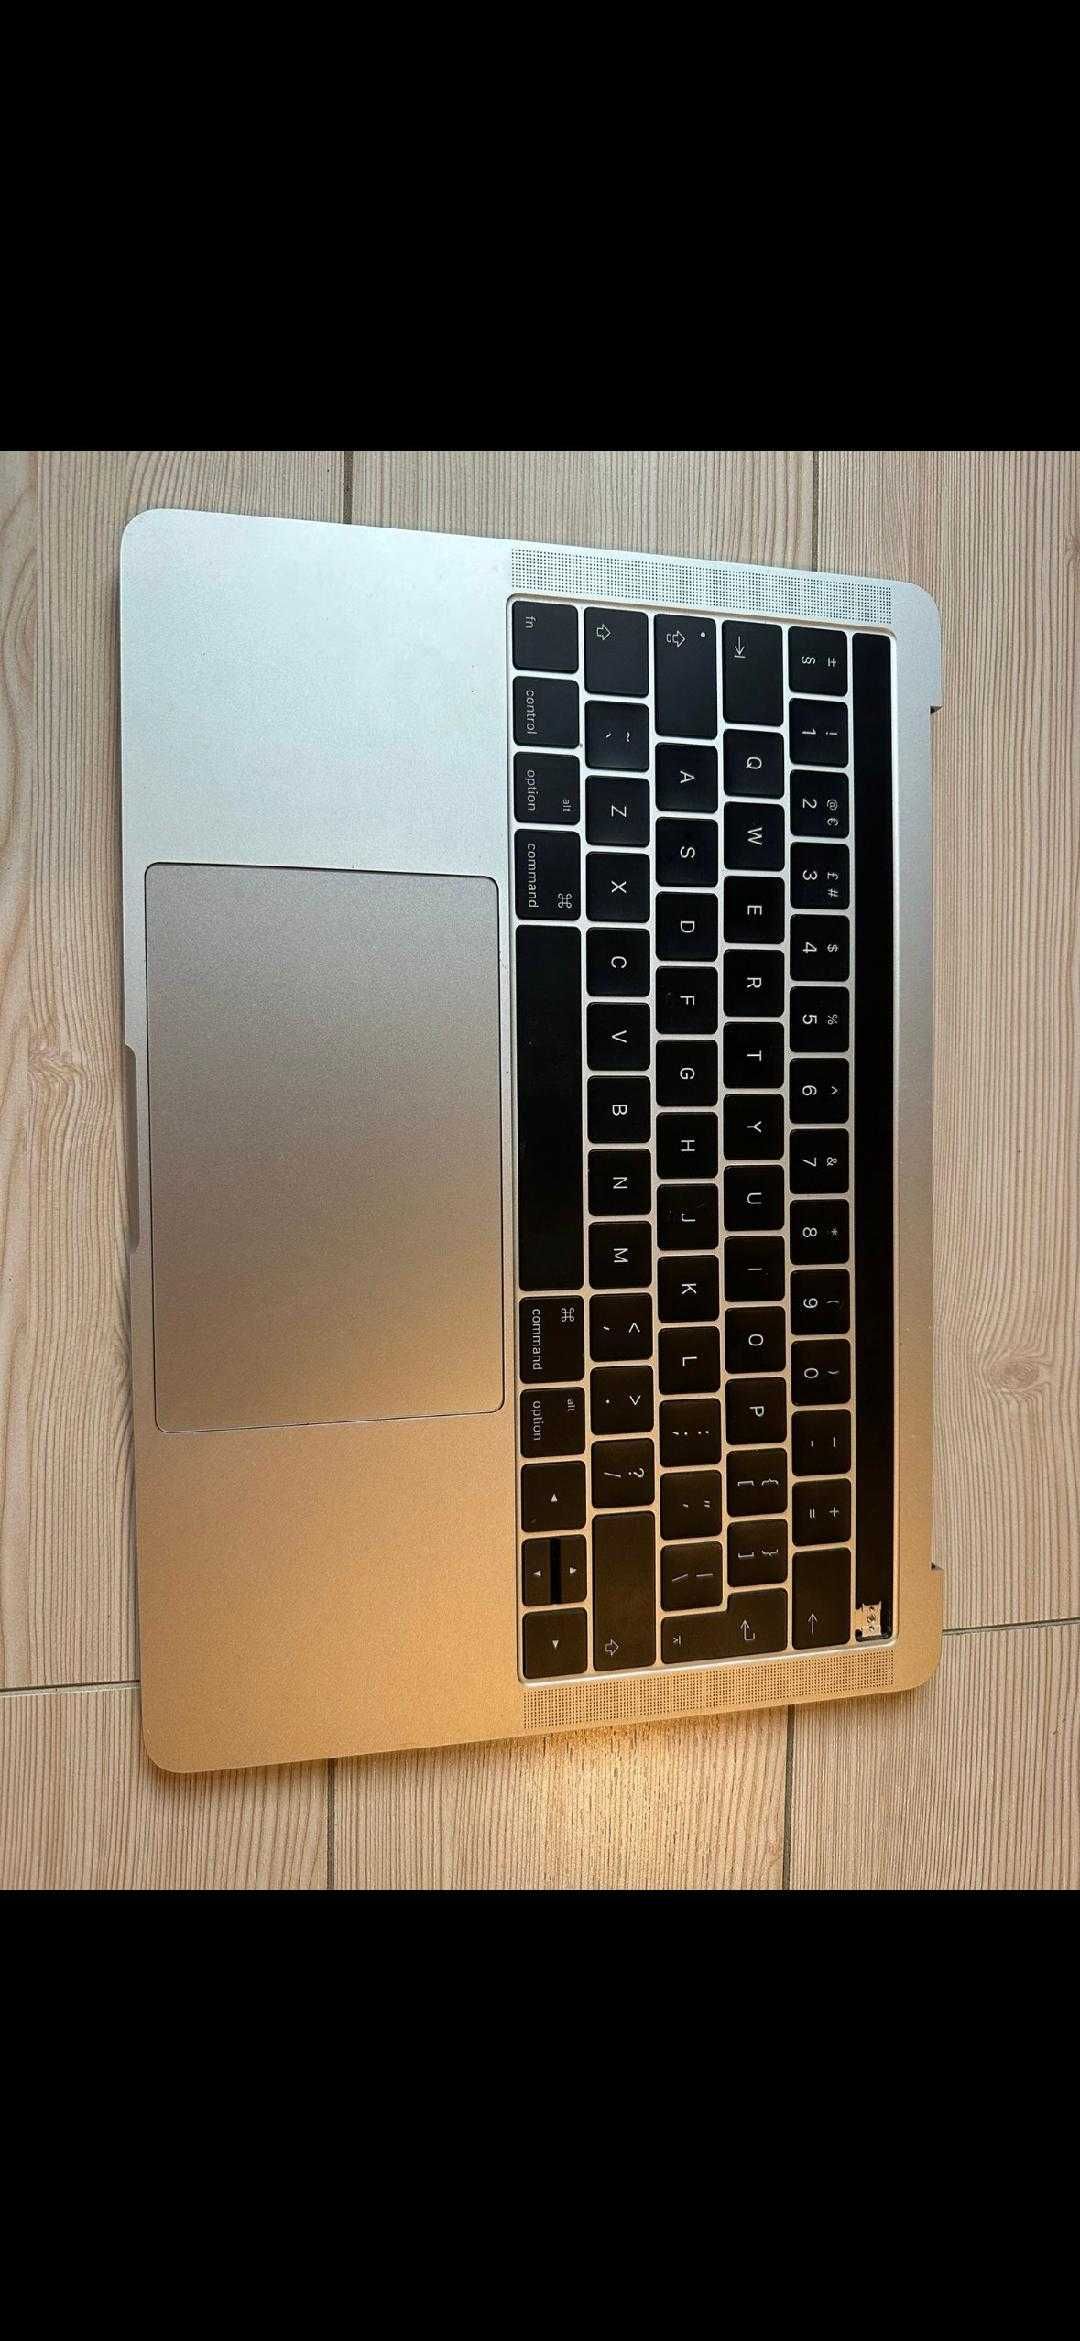 Macbook pro 13 inch body